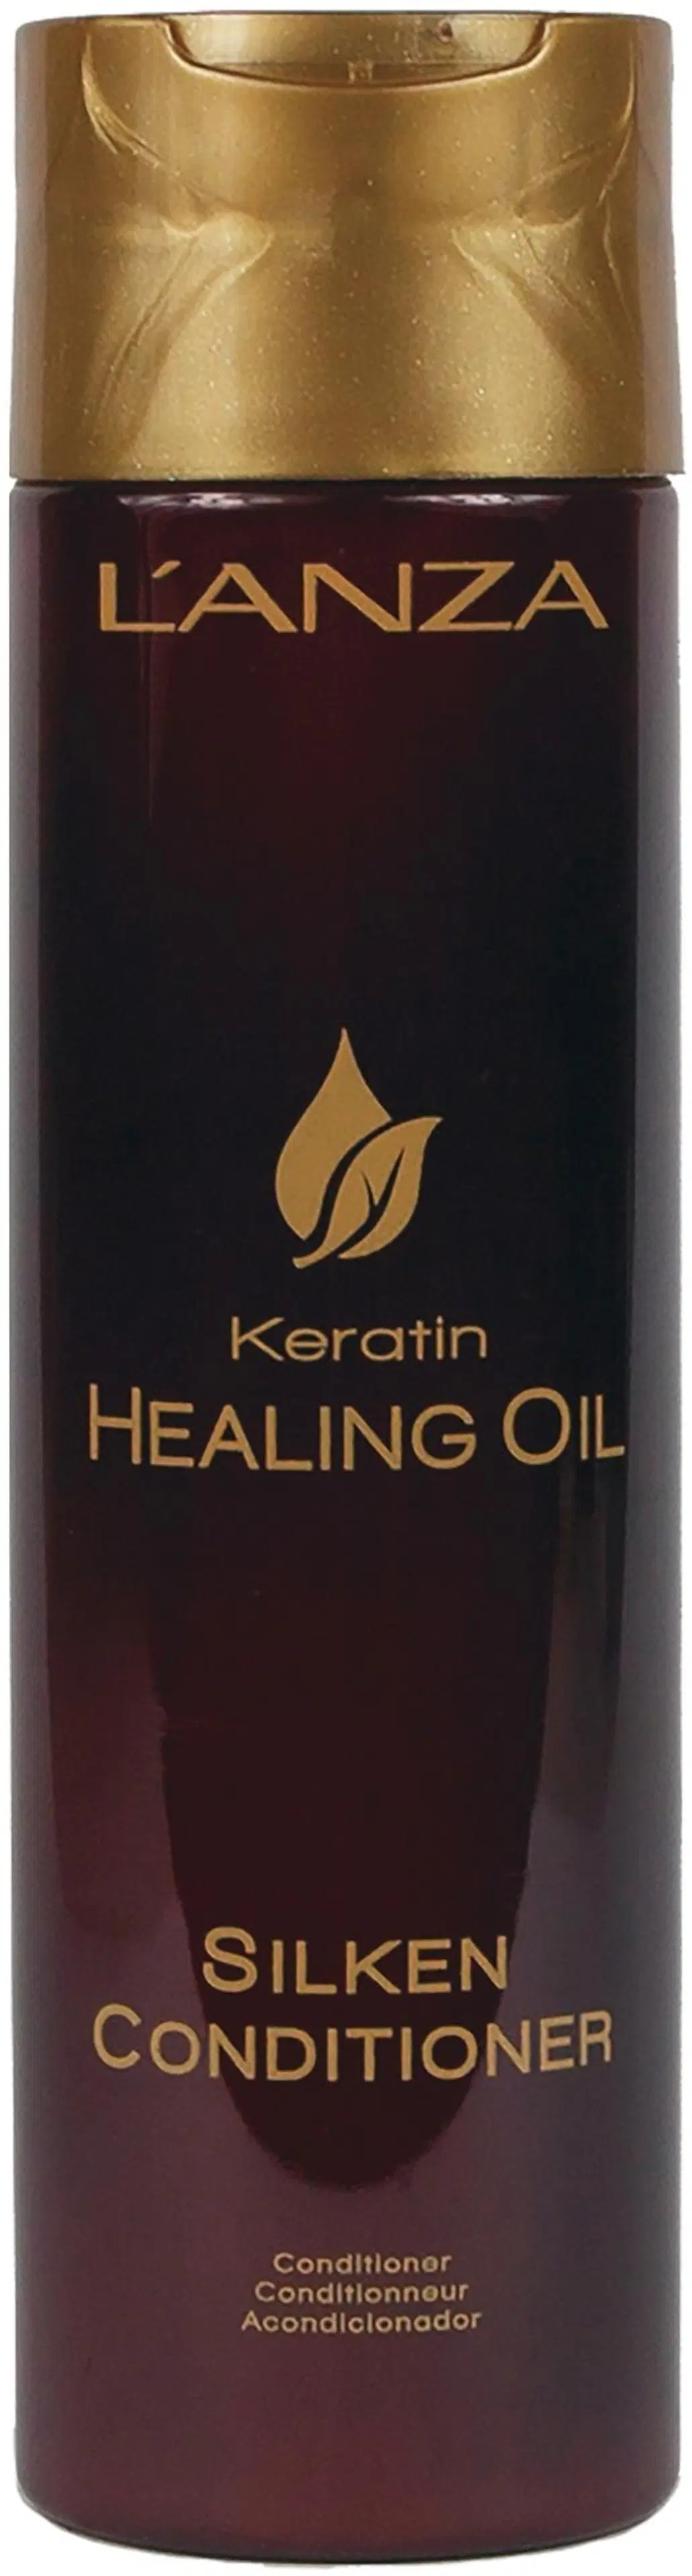 L´ANZA Keratin Healing Oil Silken Conditioner hoitoaine 250 ml